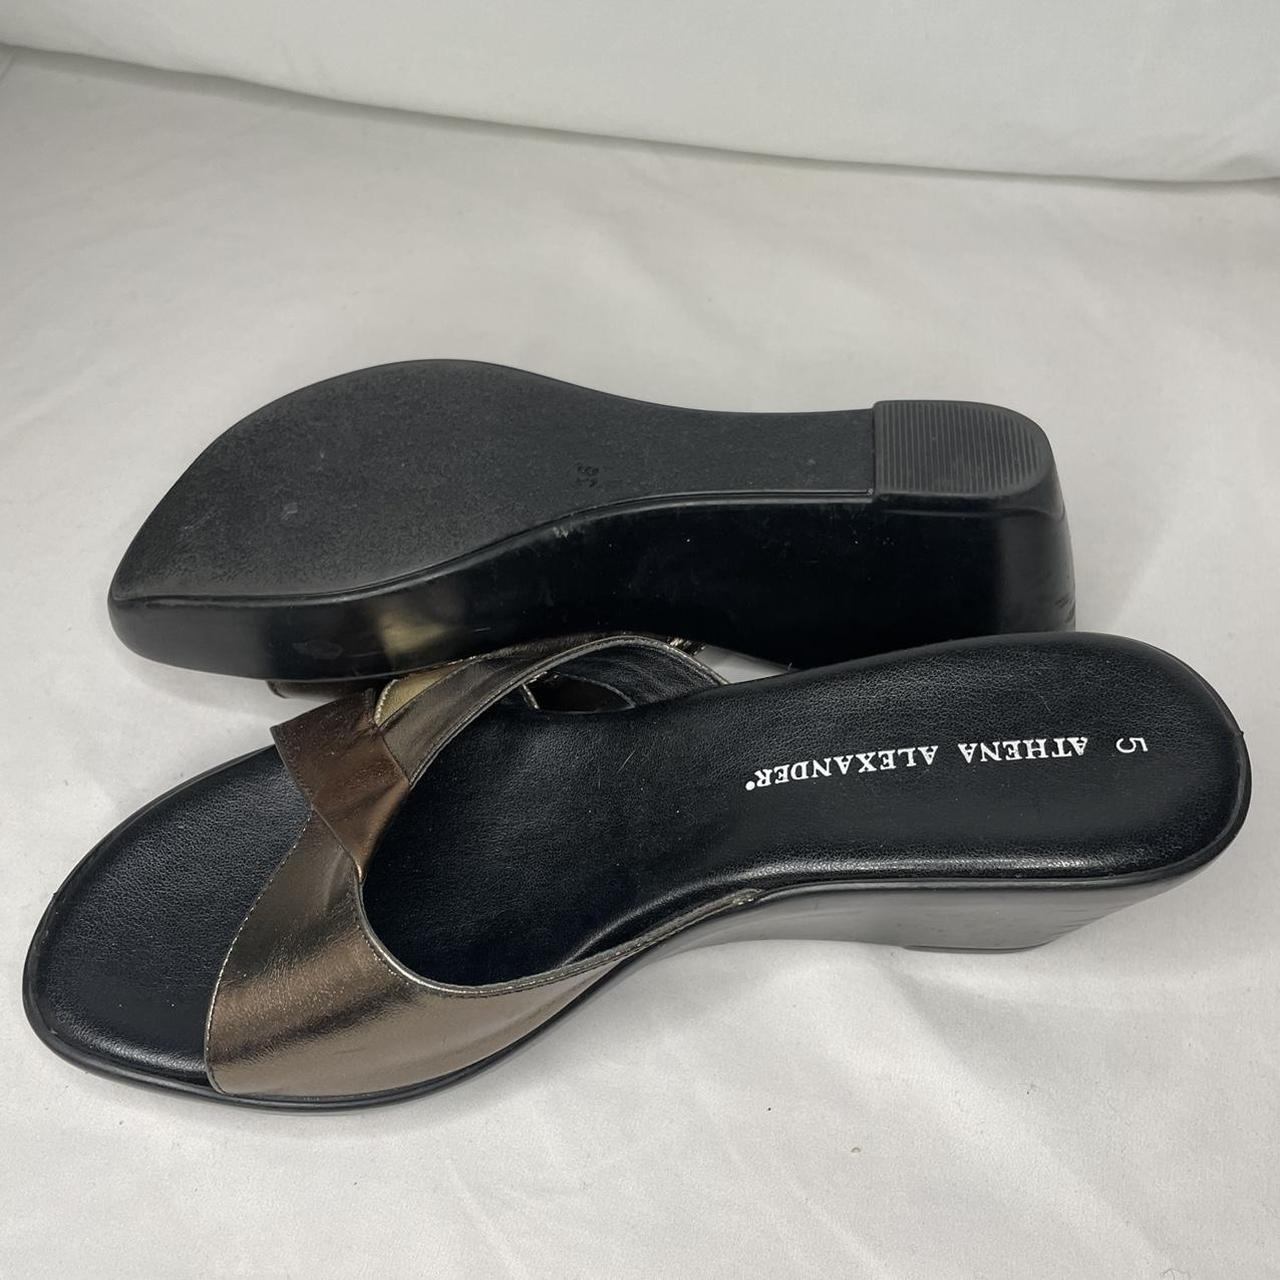 Wedge sandals by Athena Alexander, size 5, 2.5 inch... - Depop